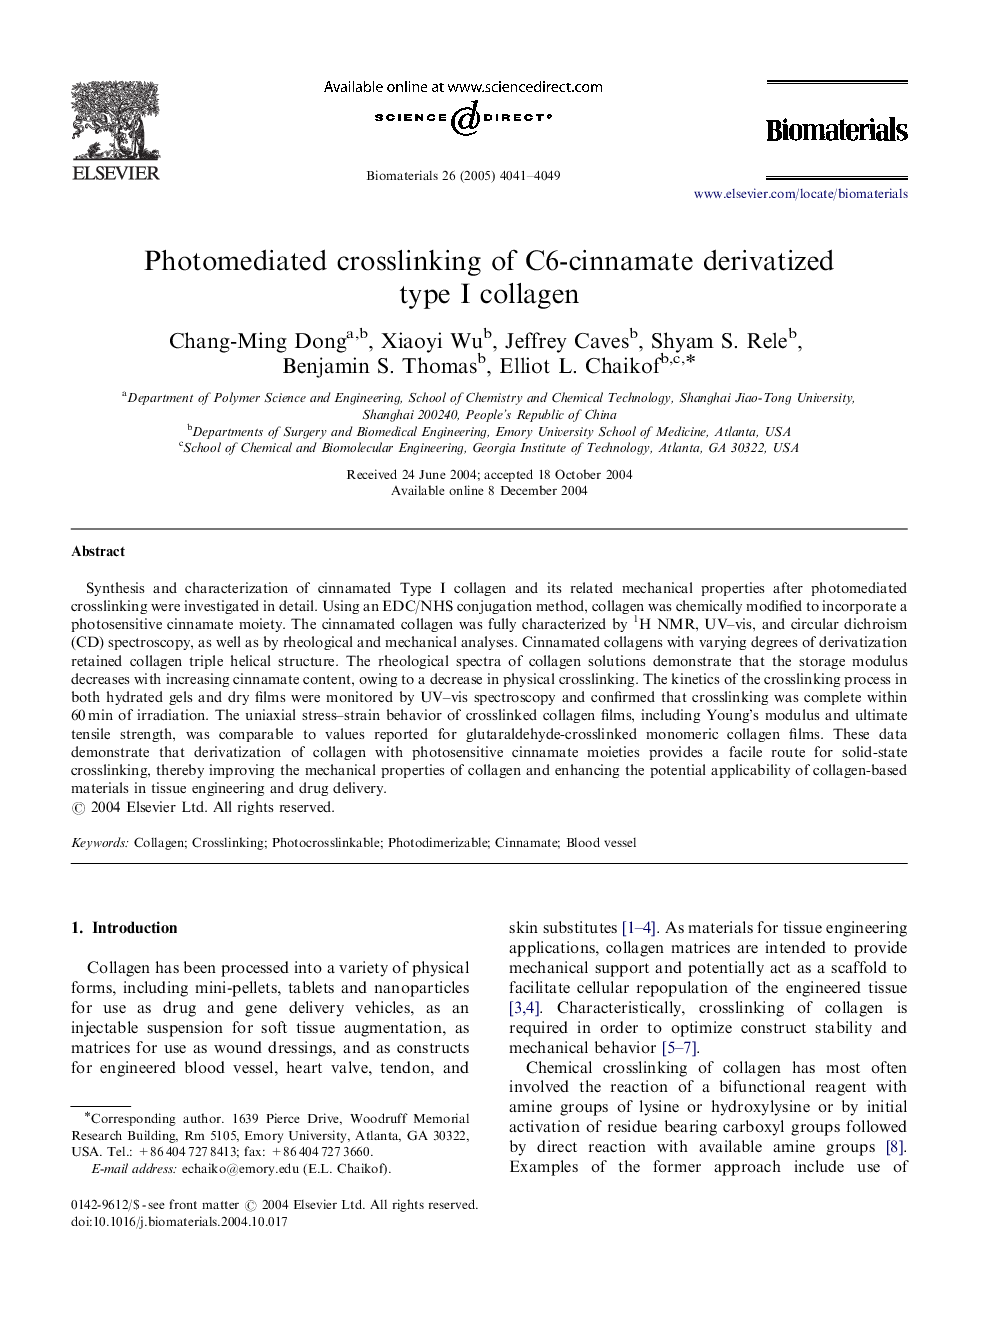 Photomediated crosslinking of C6-cinnamate derivatized type I collagen